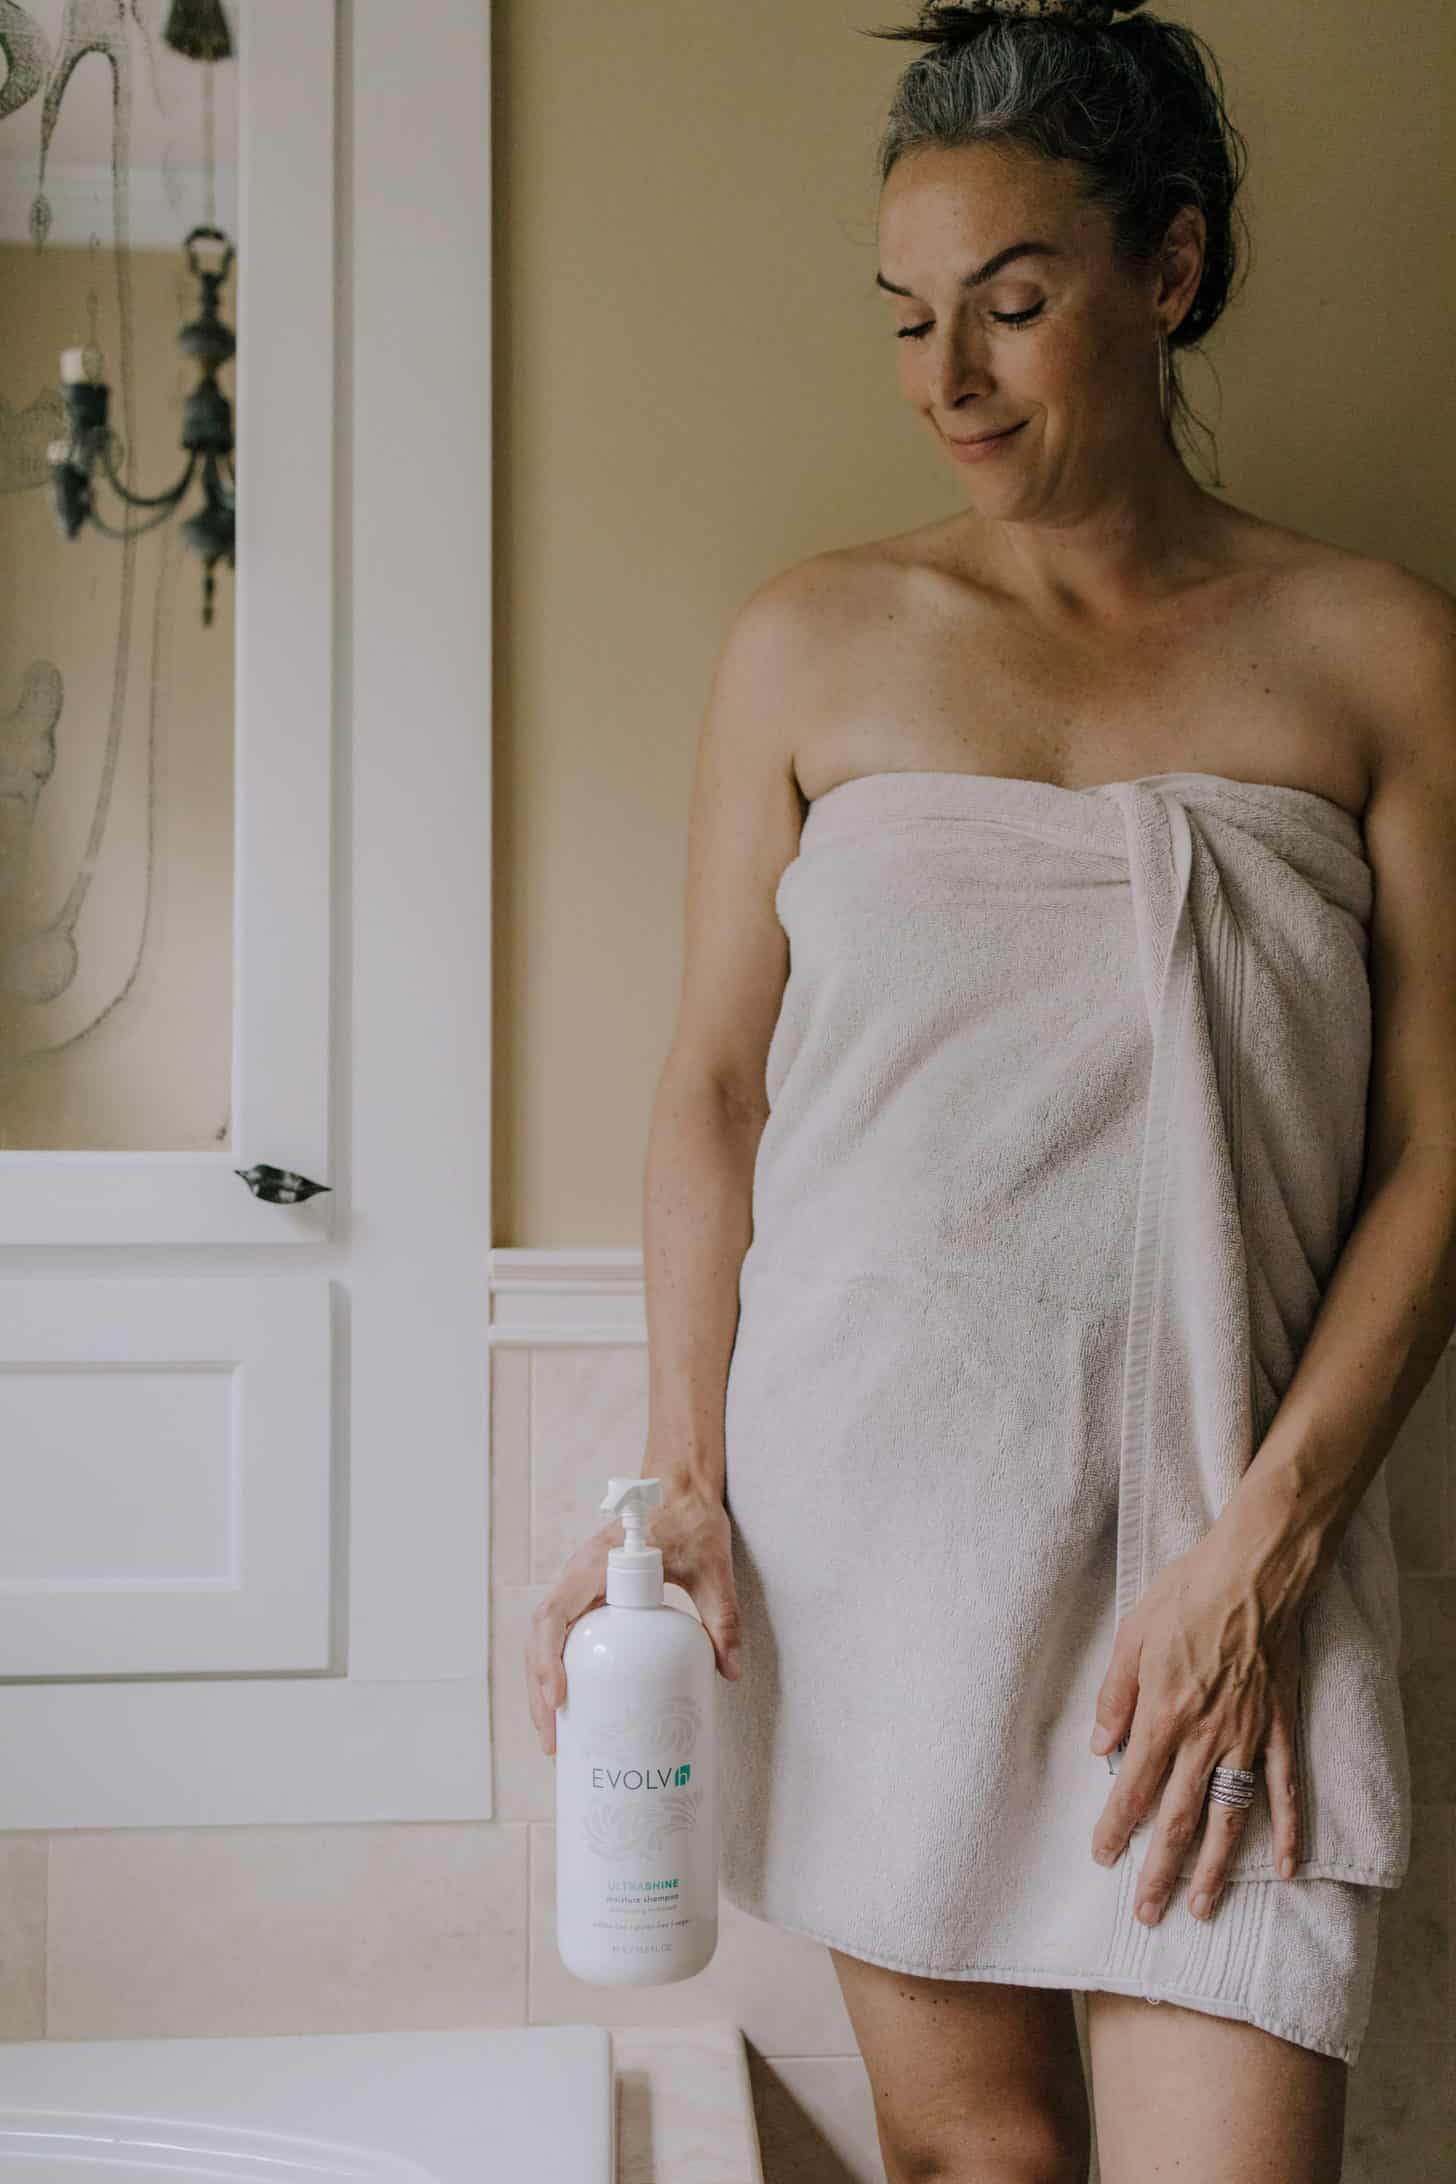 a woman holds a bottle of evolvh shampoo near her bathtub